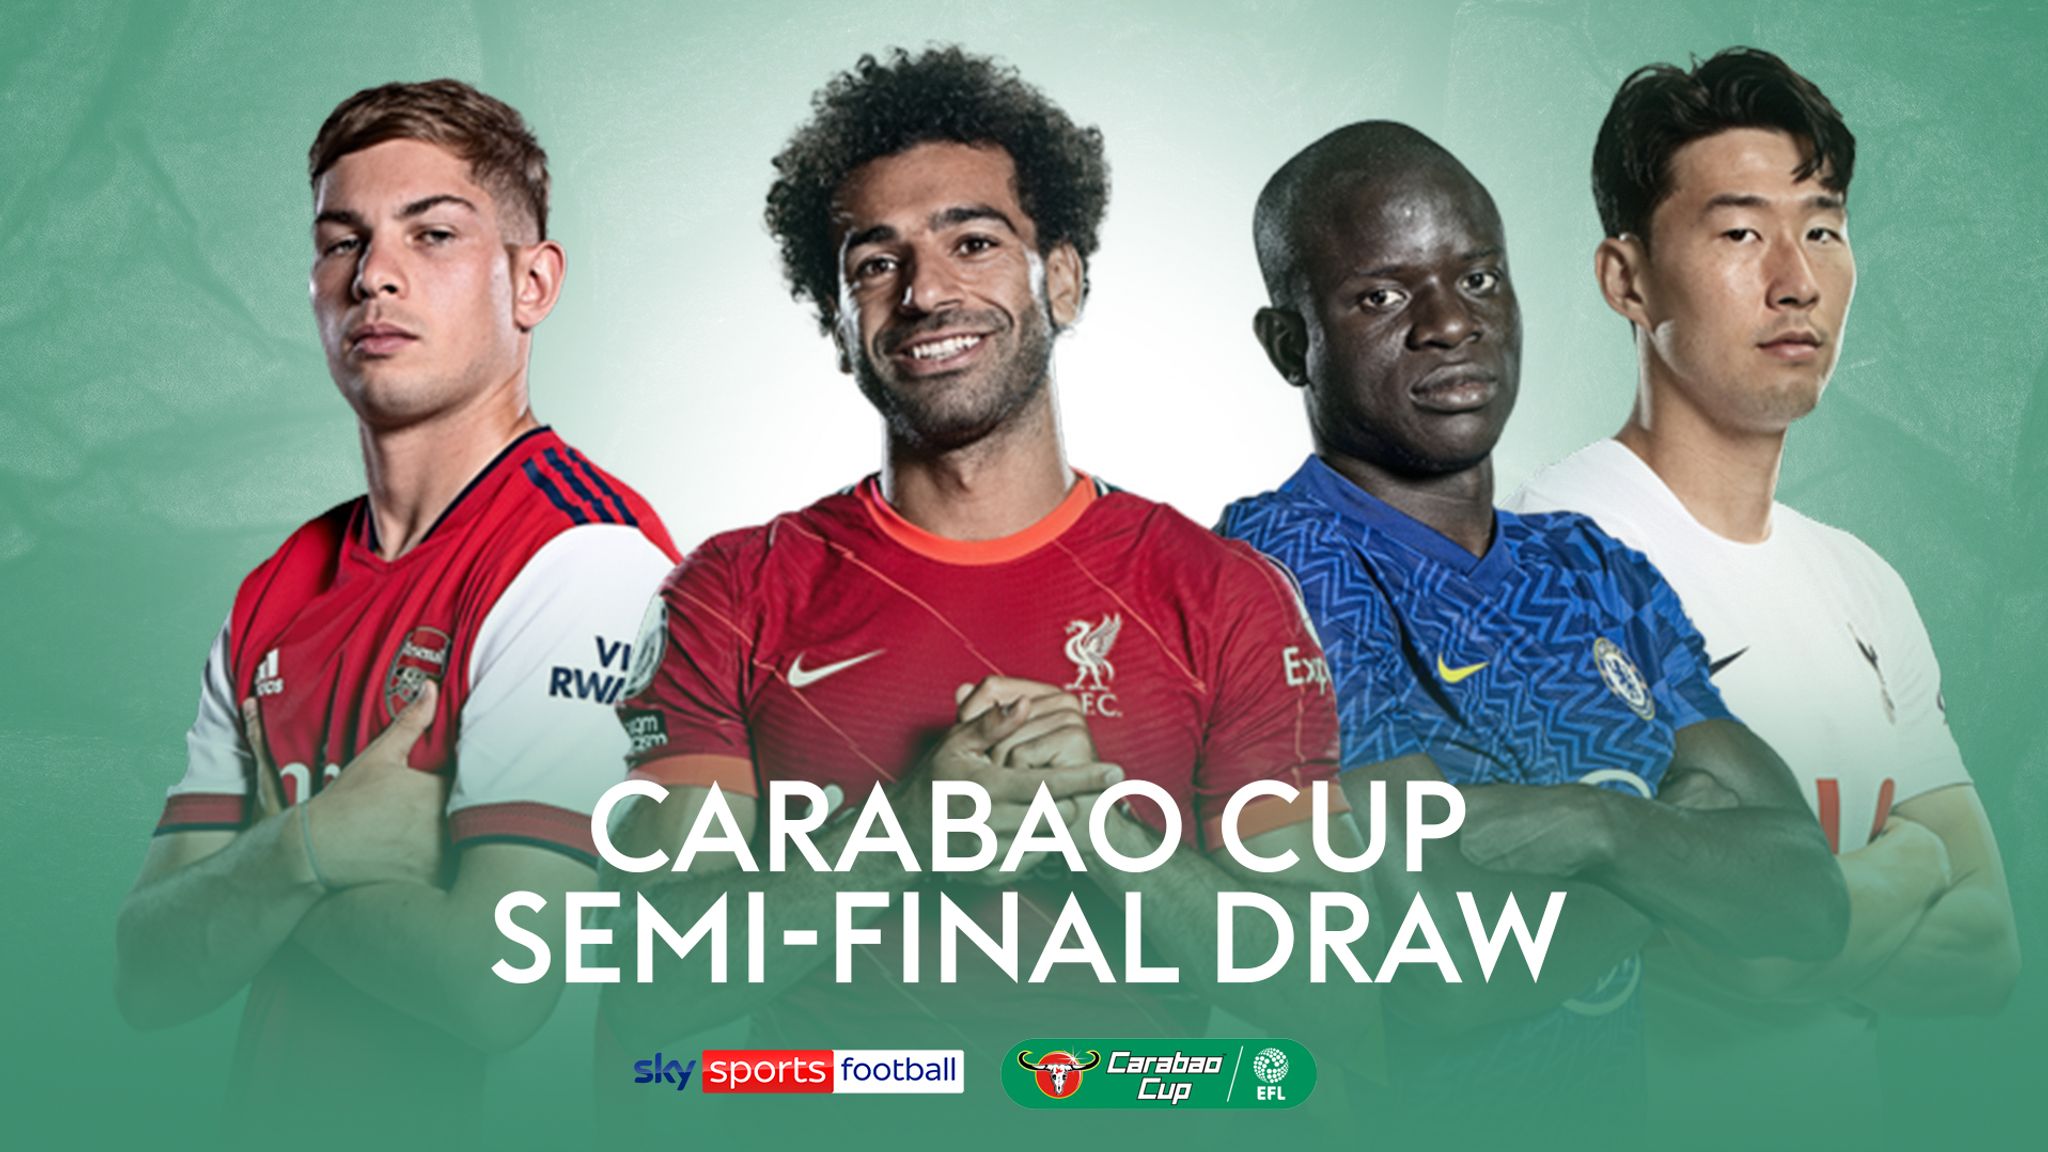 WATCH Carabao Cup semi-final draw! Football News Sky Sports